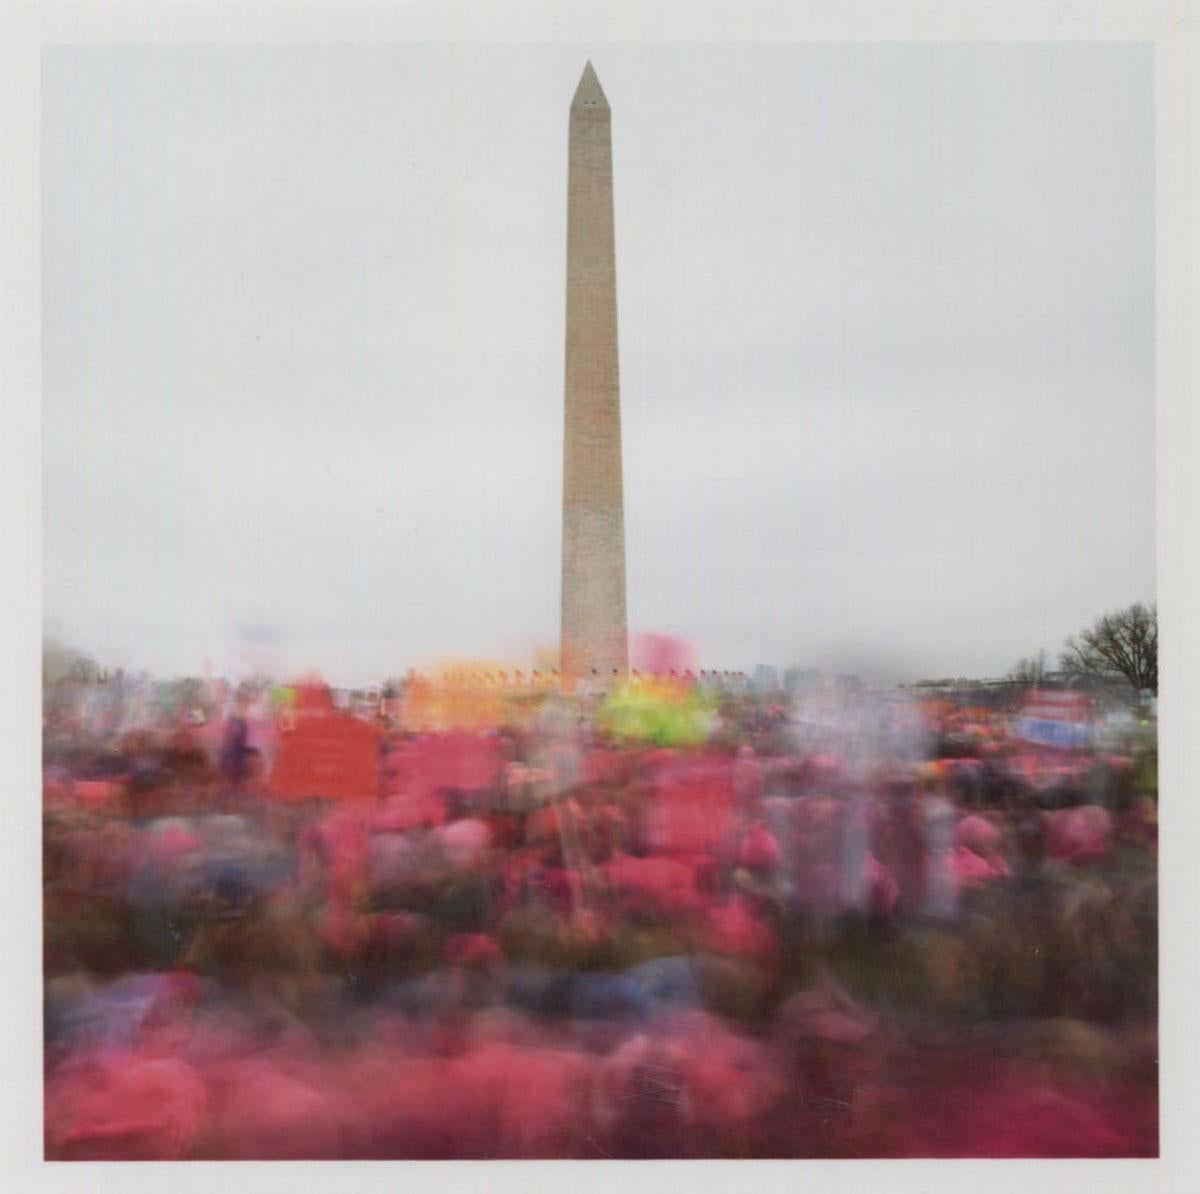 Matthew Pillsbury Landscape Photograph - The Women’s March on Washington